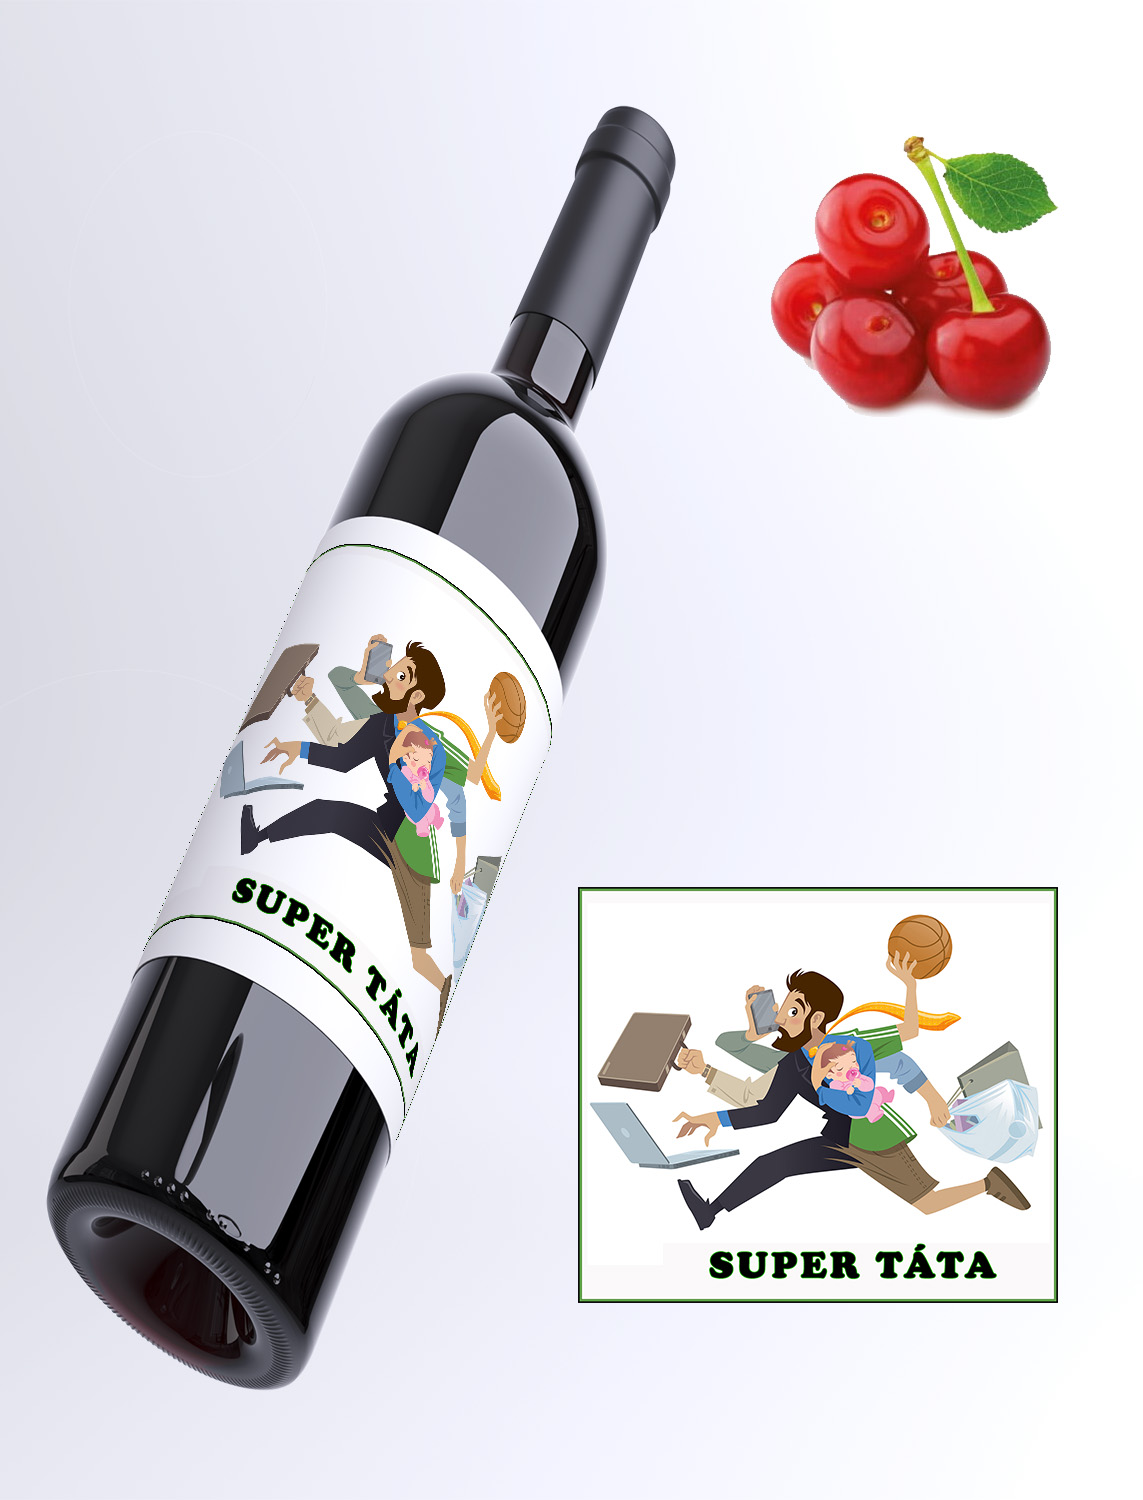 Super táta - Višňové víno 